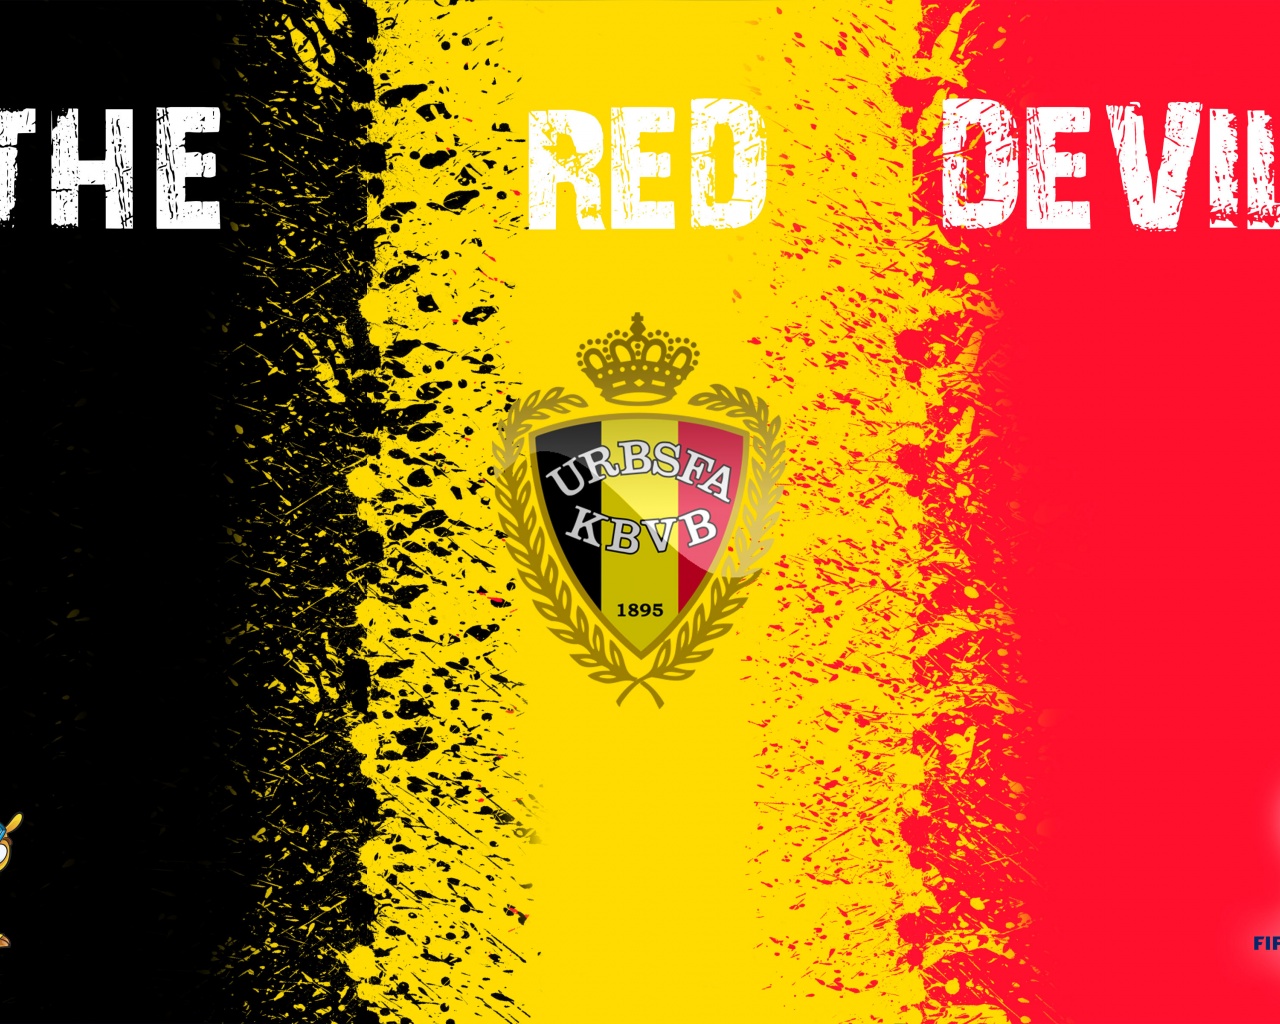 The Red Devils Belgium Football Crest Logo